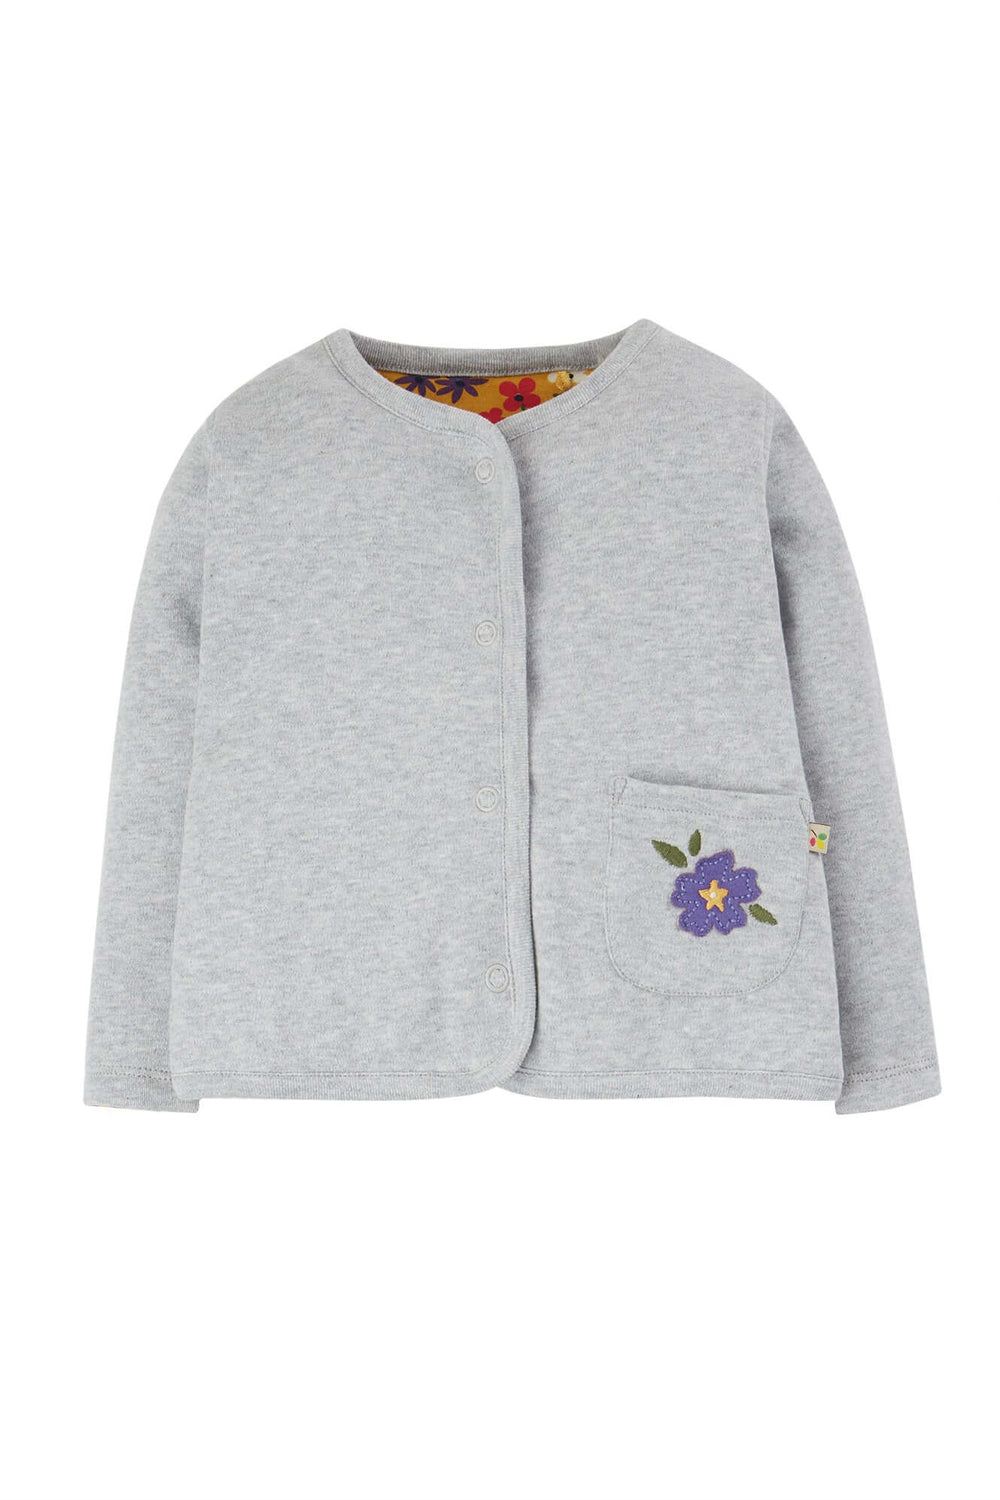 Frugi Reversible Joy Jacket Grey Marl Wild Flower